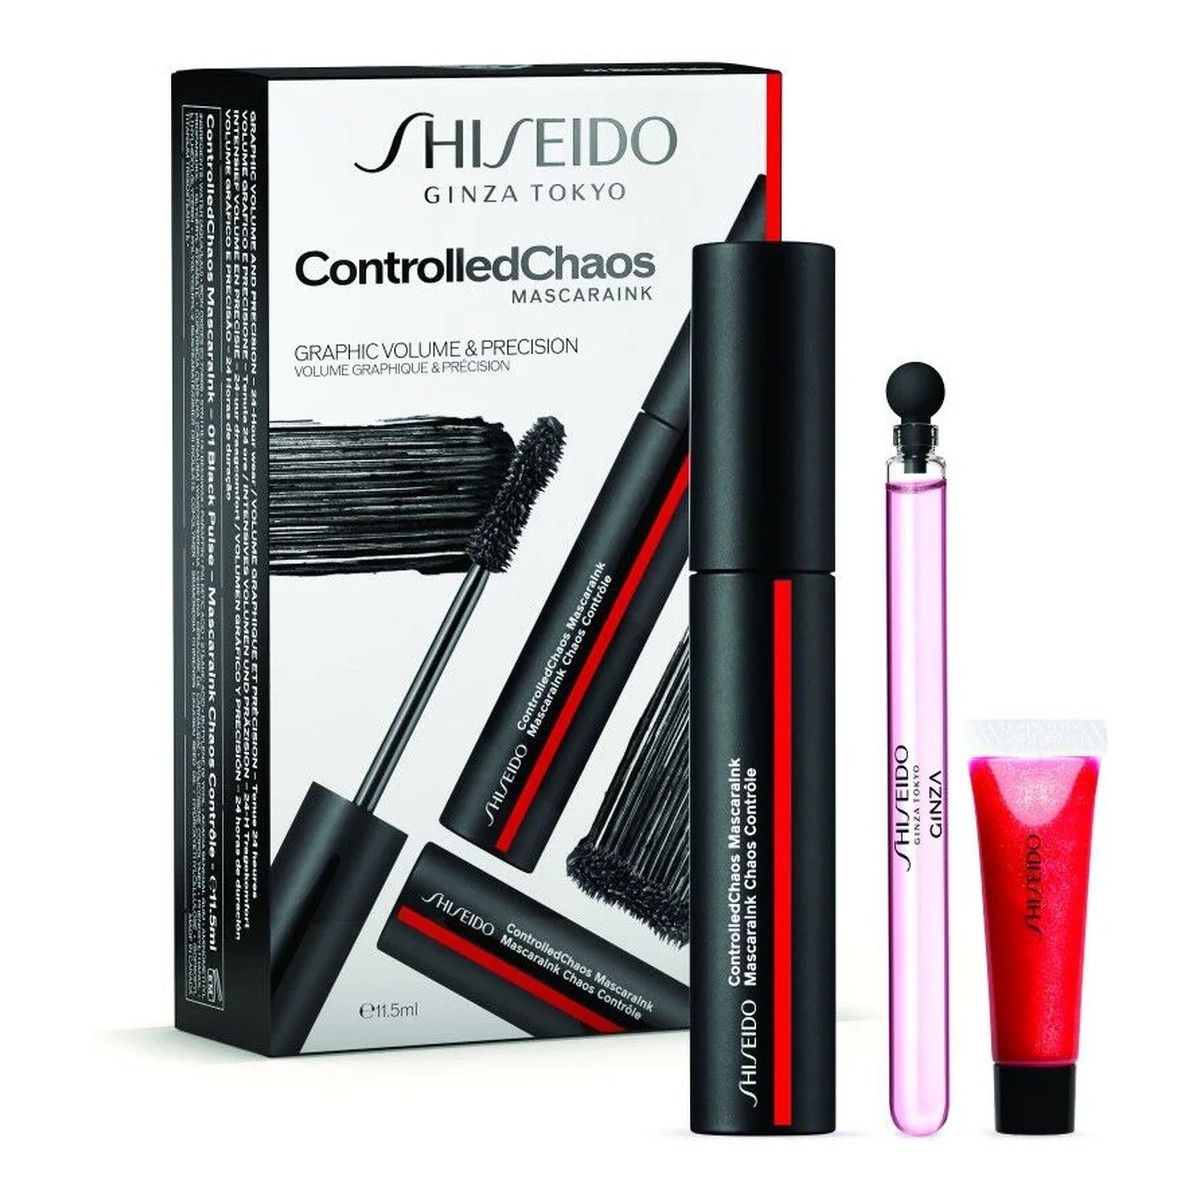 Shiseido Zestaw controlledchaos mascaraink 01 black 11.5ml + ginza woda perfumowana 4ml + shimmer gelgloss shade 07 shin-ku red 2ml